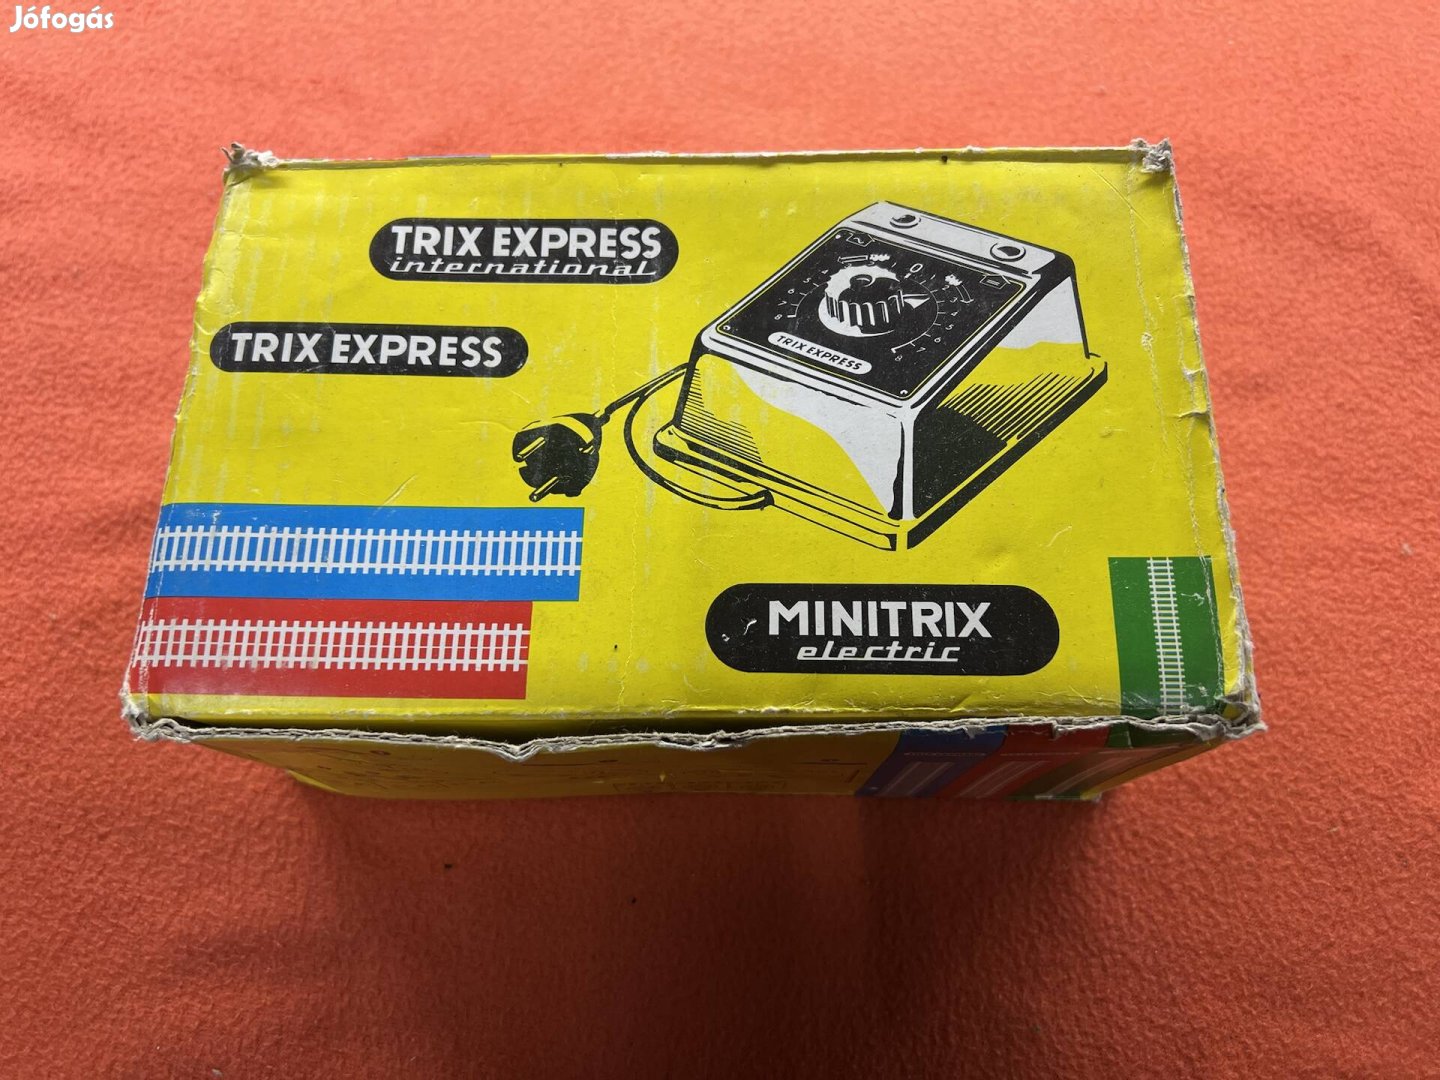 Trix express minitrix modellvasút trafó